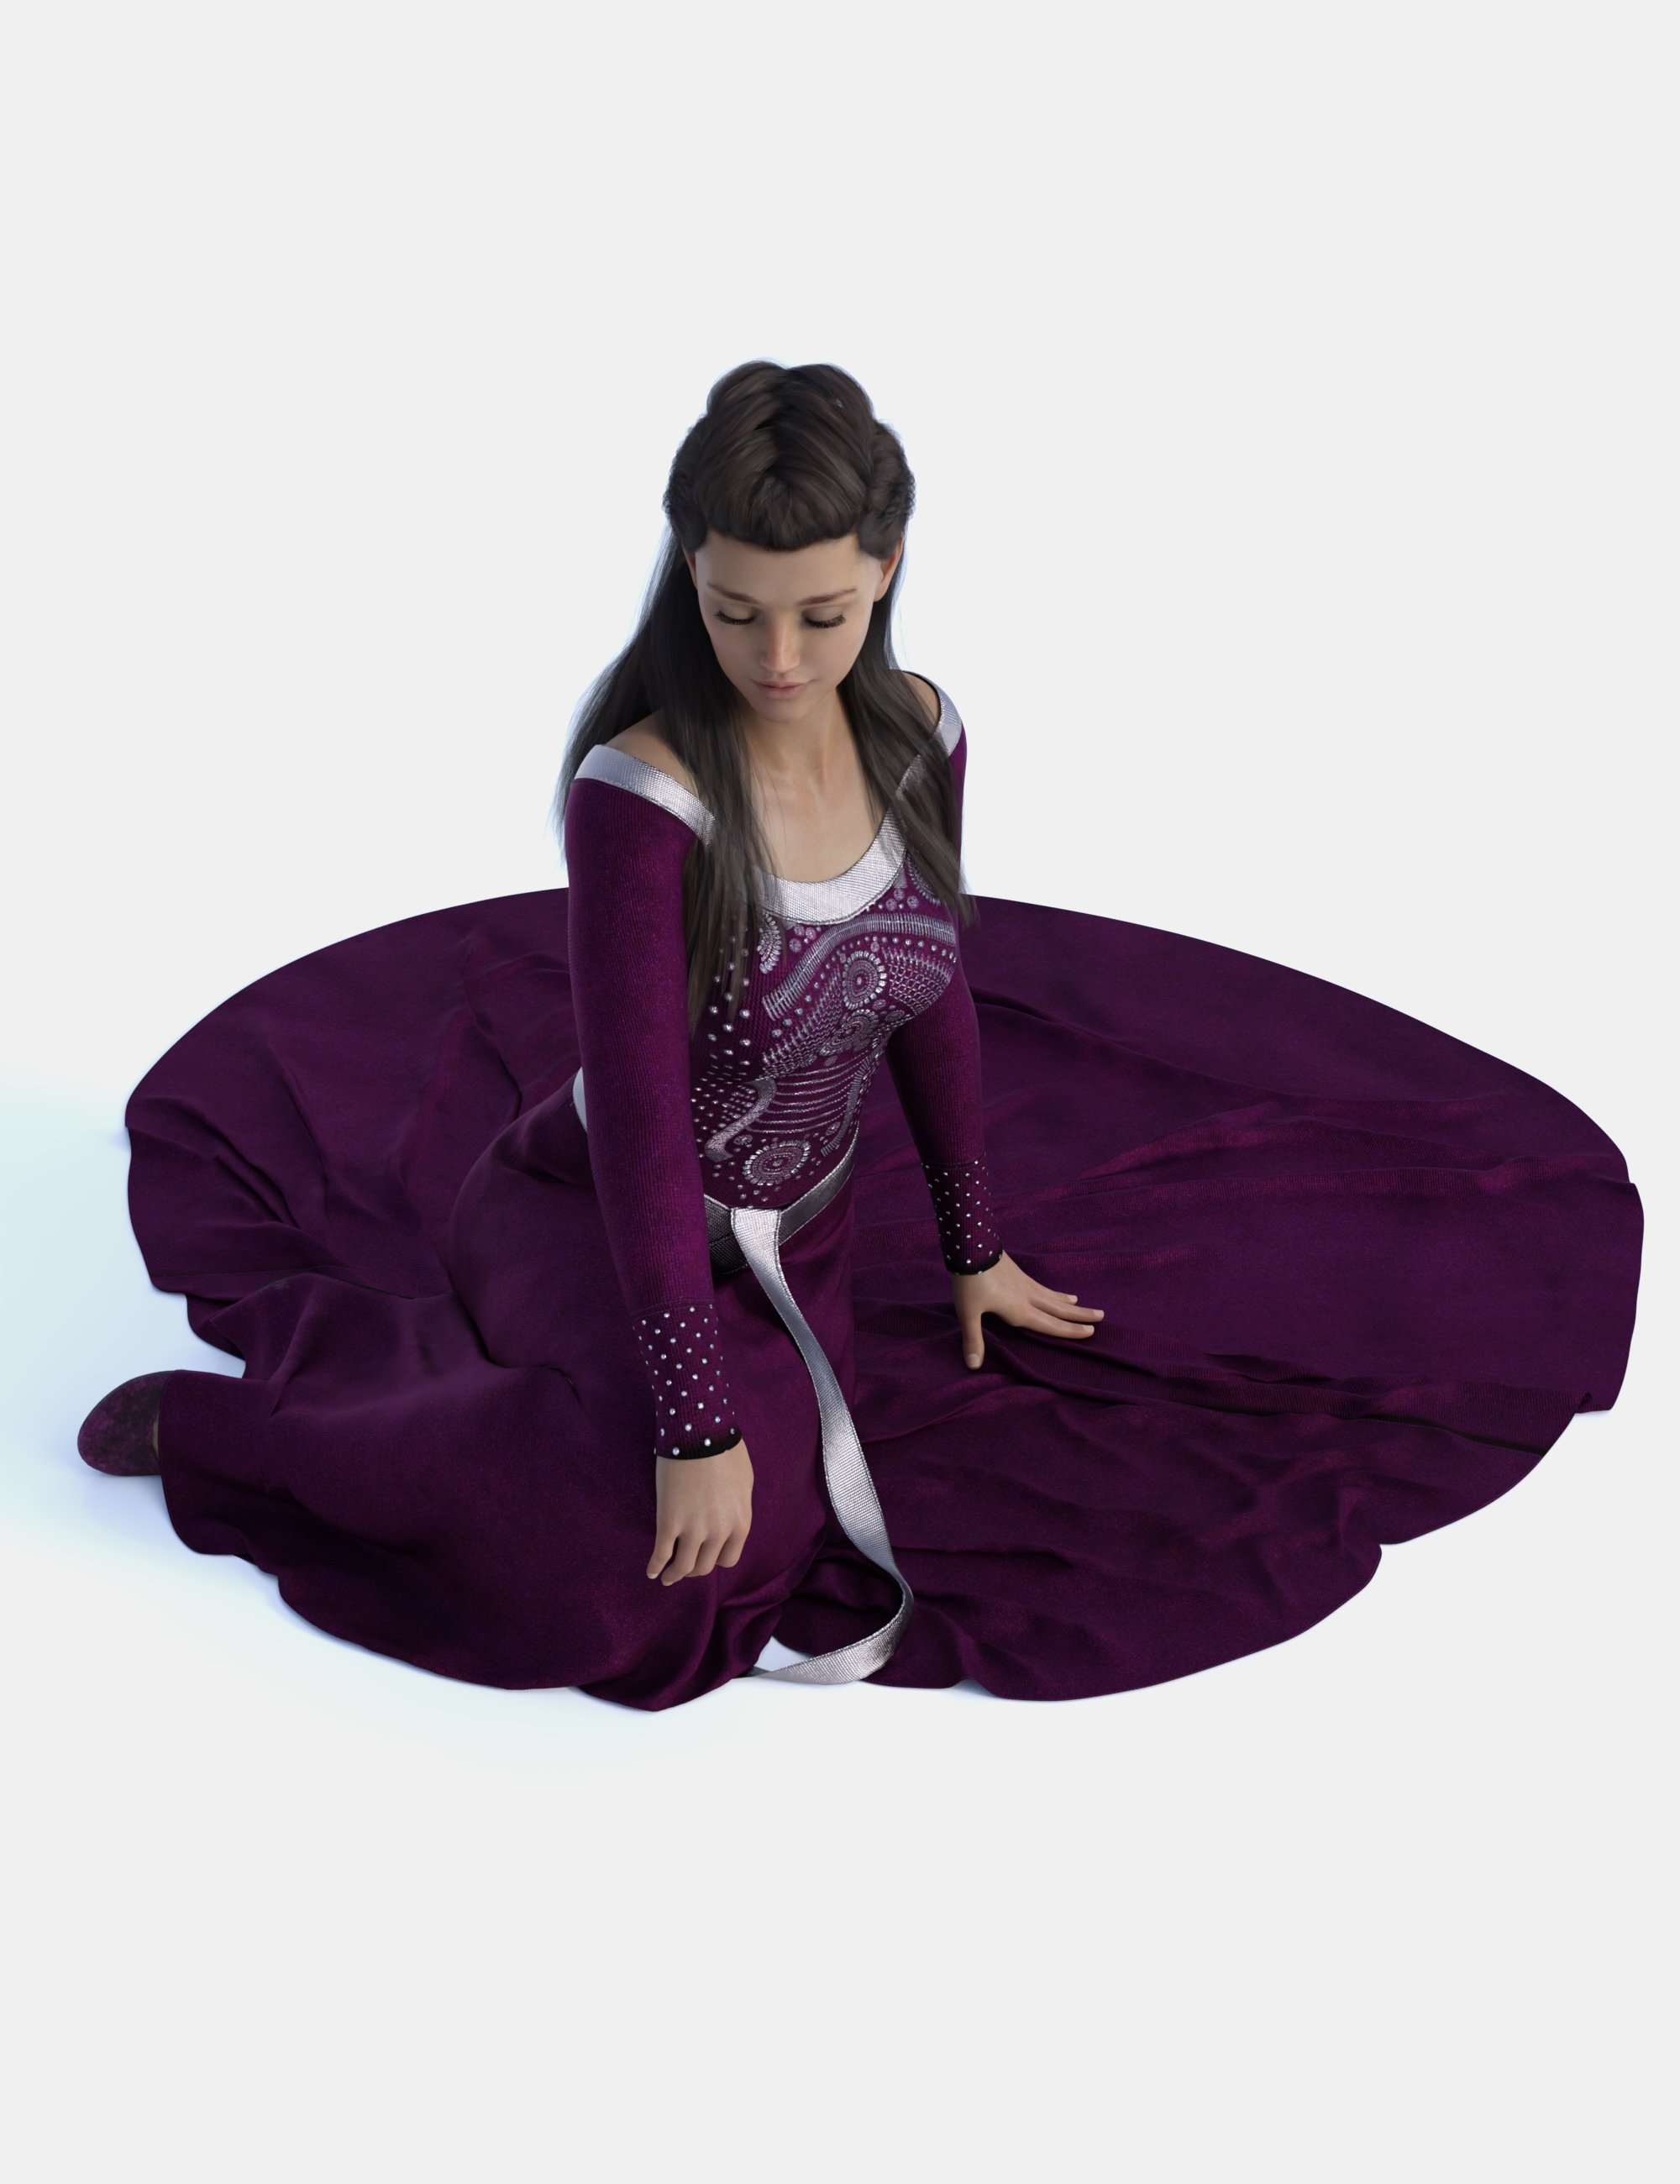 Nobility Textures for dForce Elven Dress by: Sade, 3D Models by Daz 3D